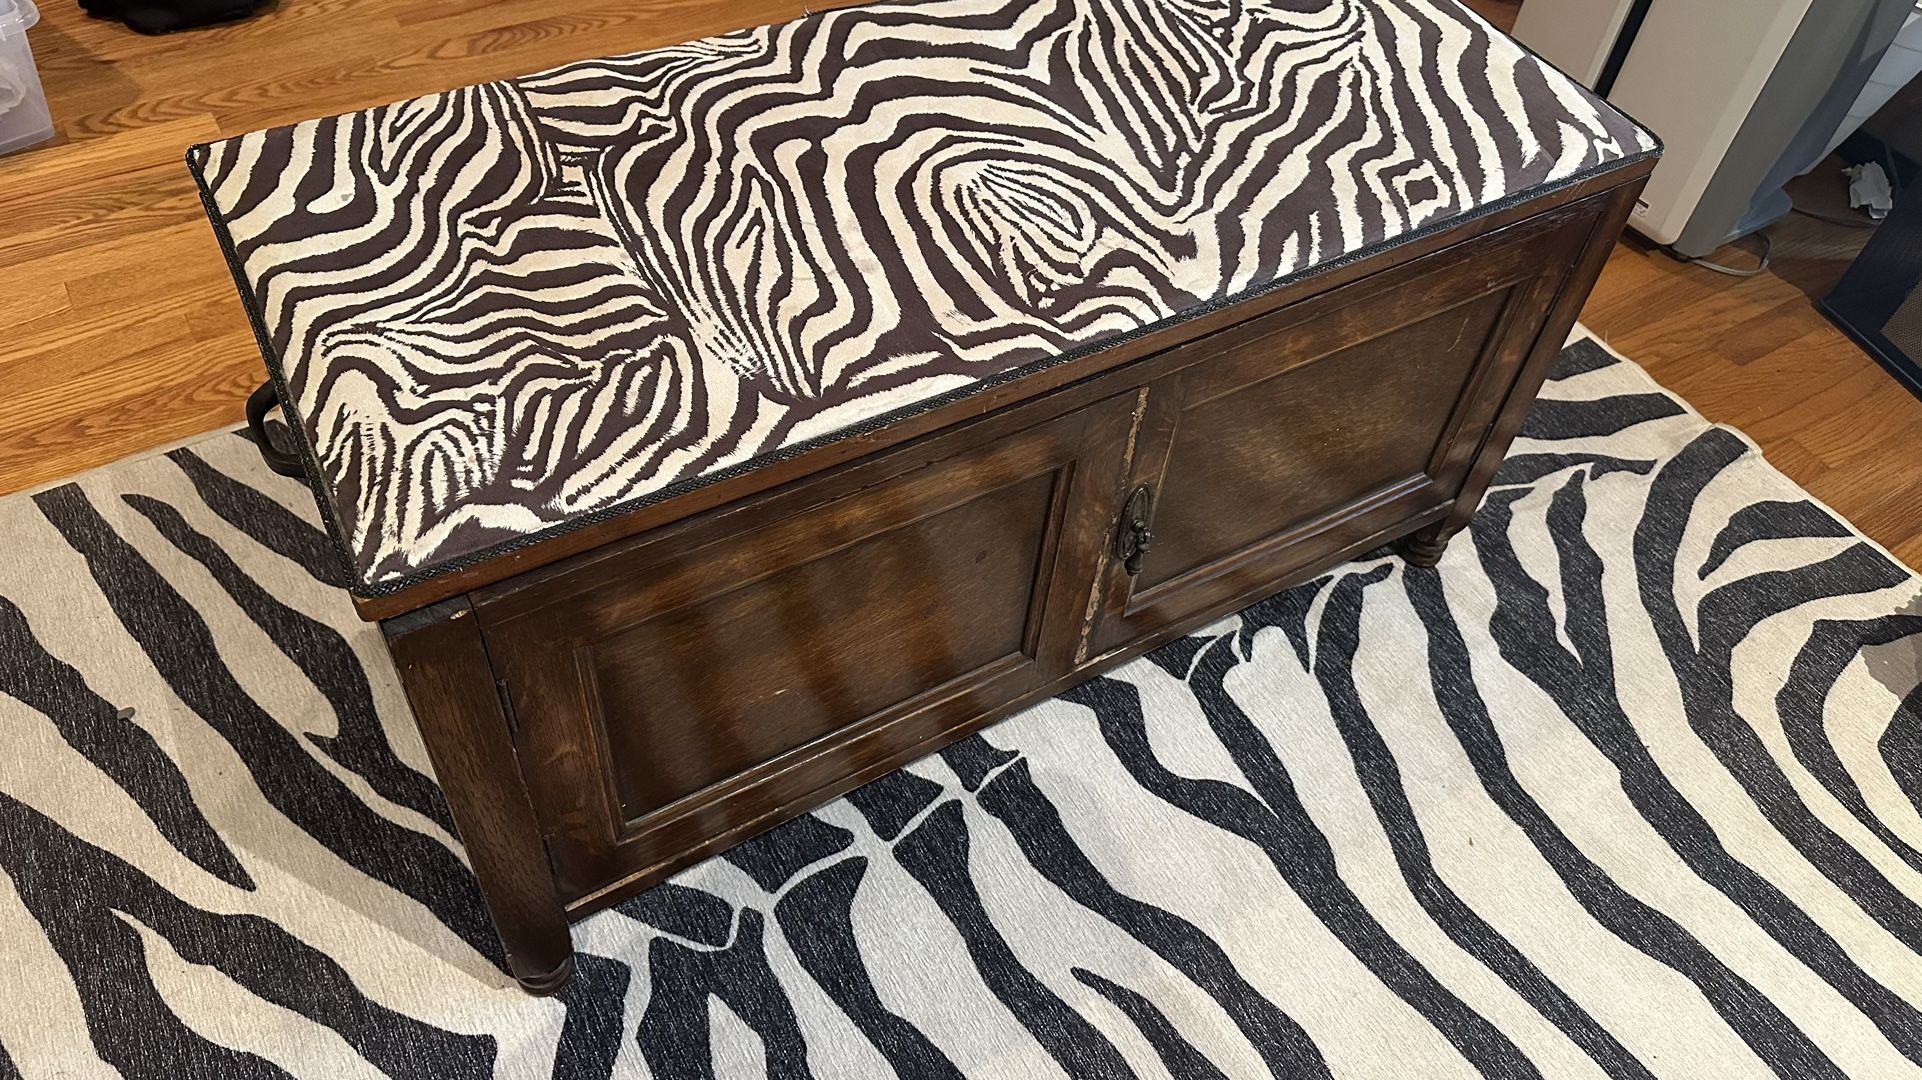 Antique Trunk With Zebra fabric